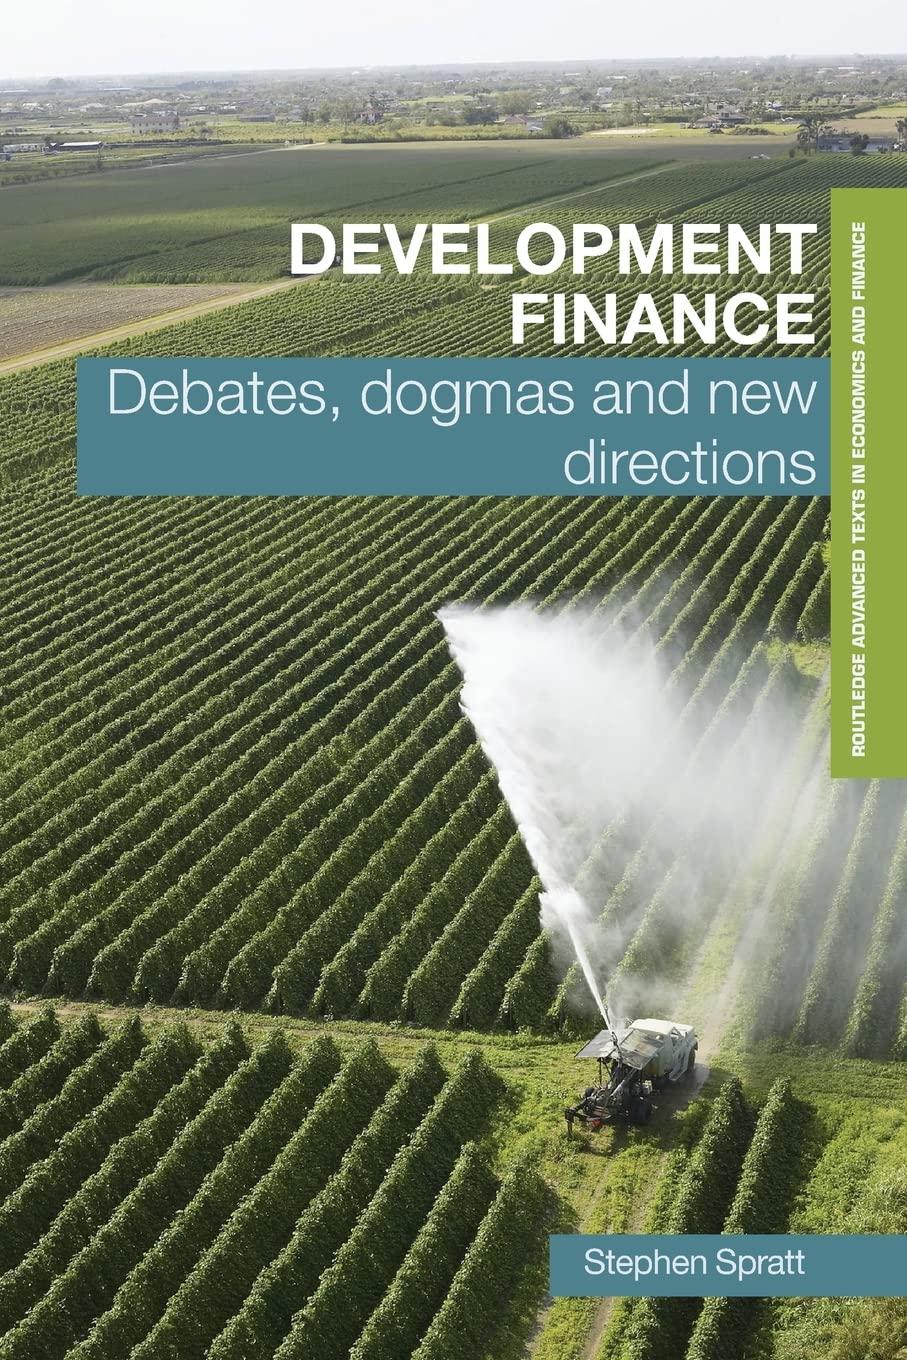 development finance debates dogmas and new directions 1st edition stephen spratt 0415423171, 978-0415423175